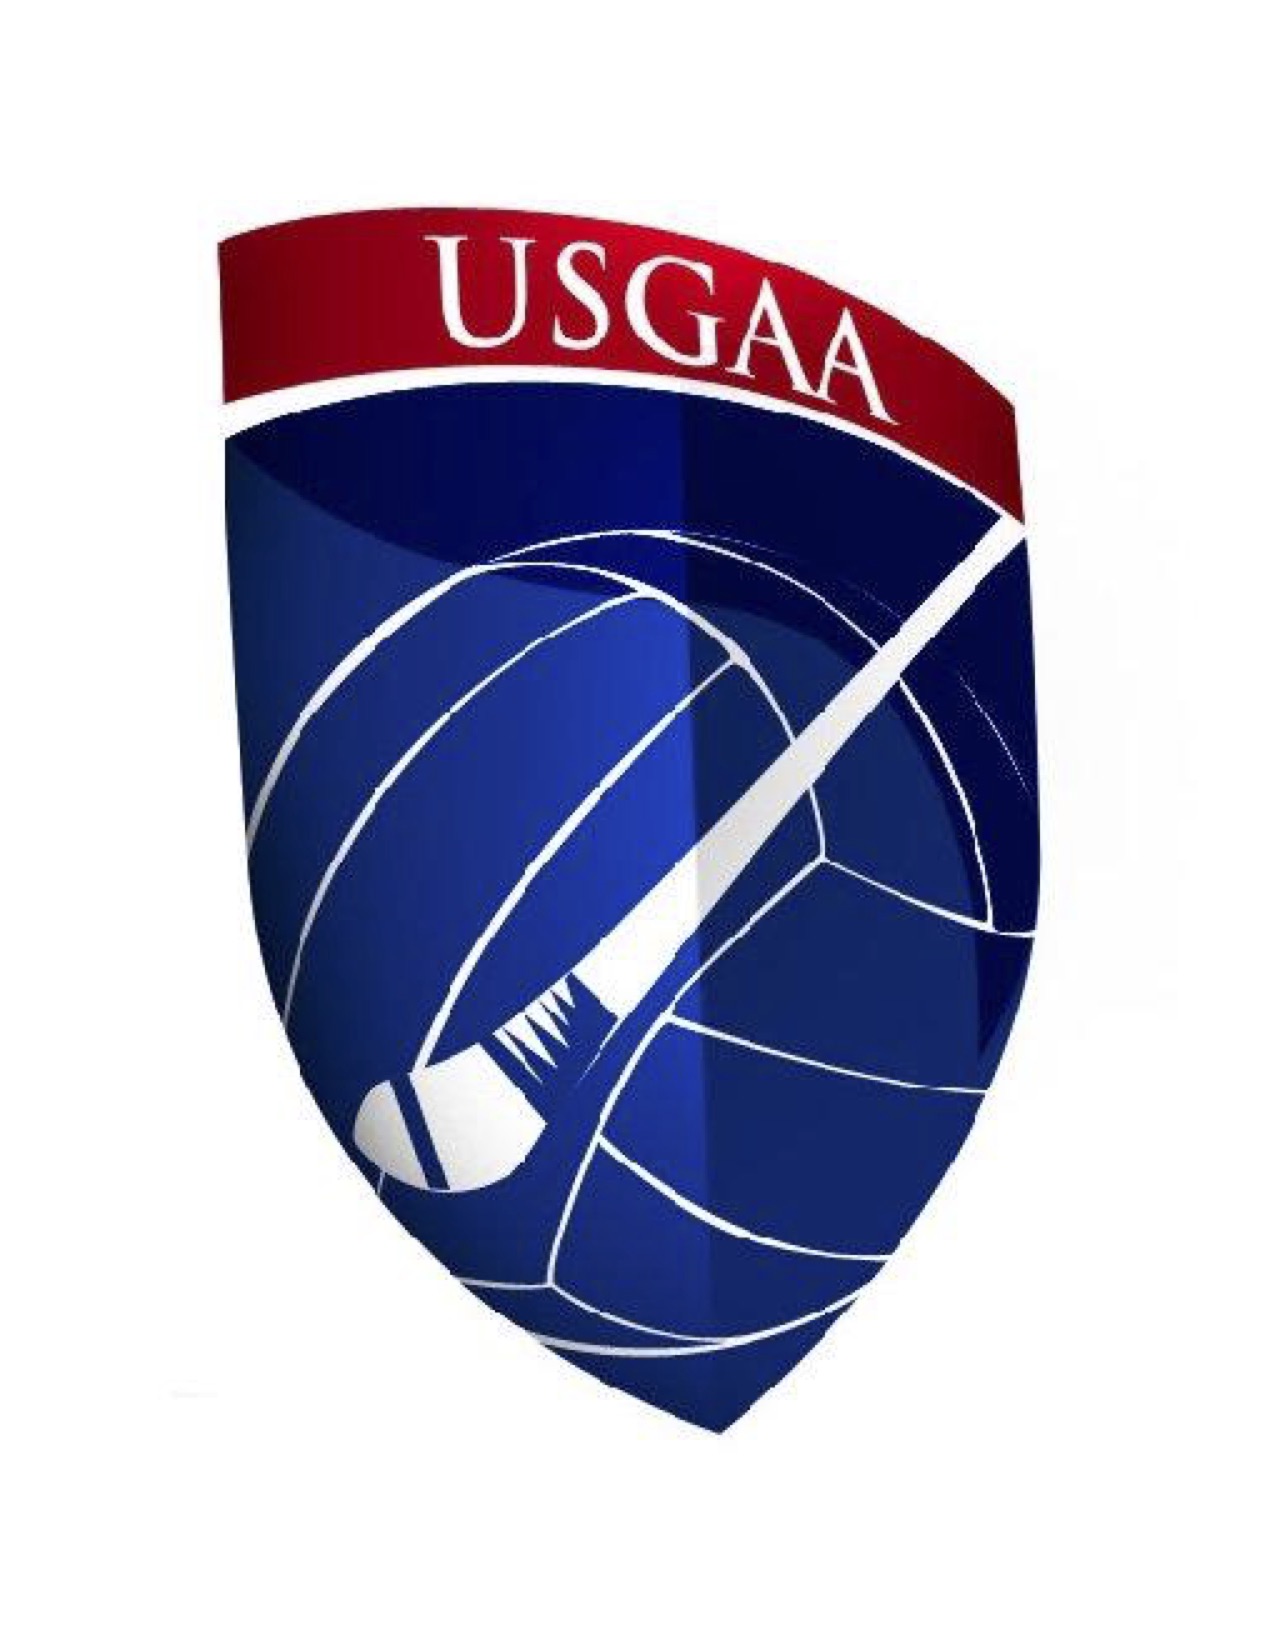 USGAA logo